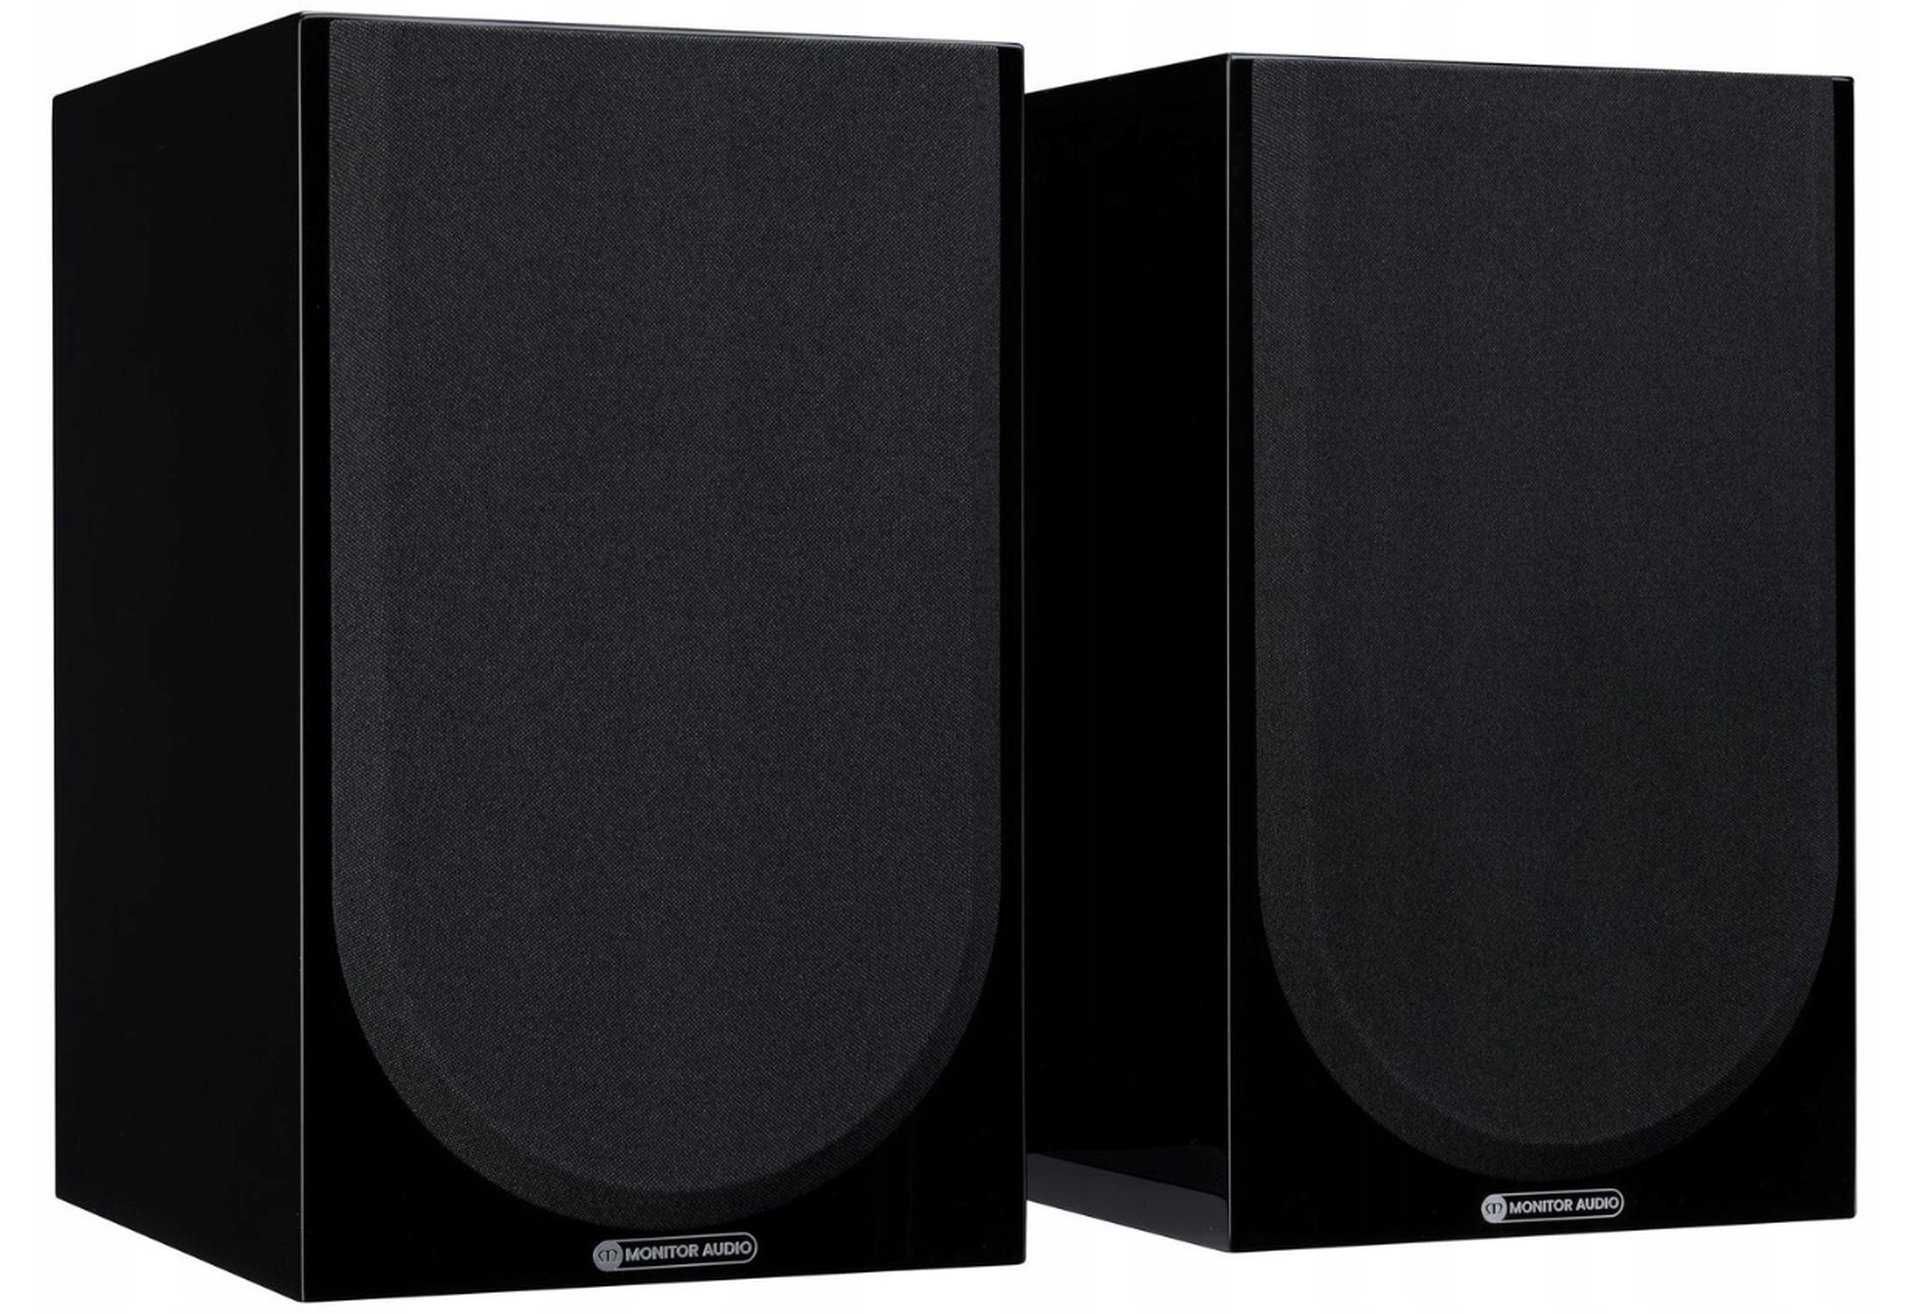 OKAZJA Monitor Audio Silver 100 7G piano black Hi-Fi Gwarancja Raty 0%